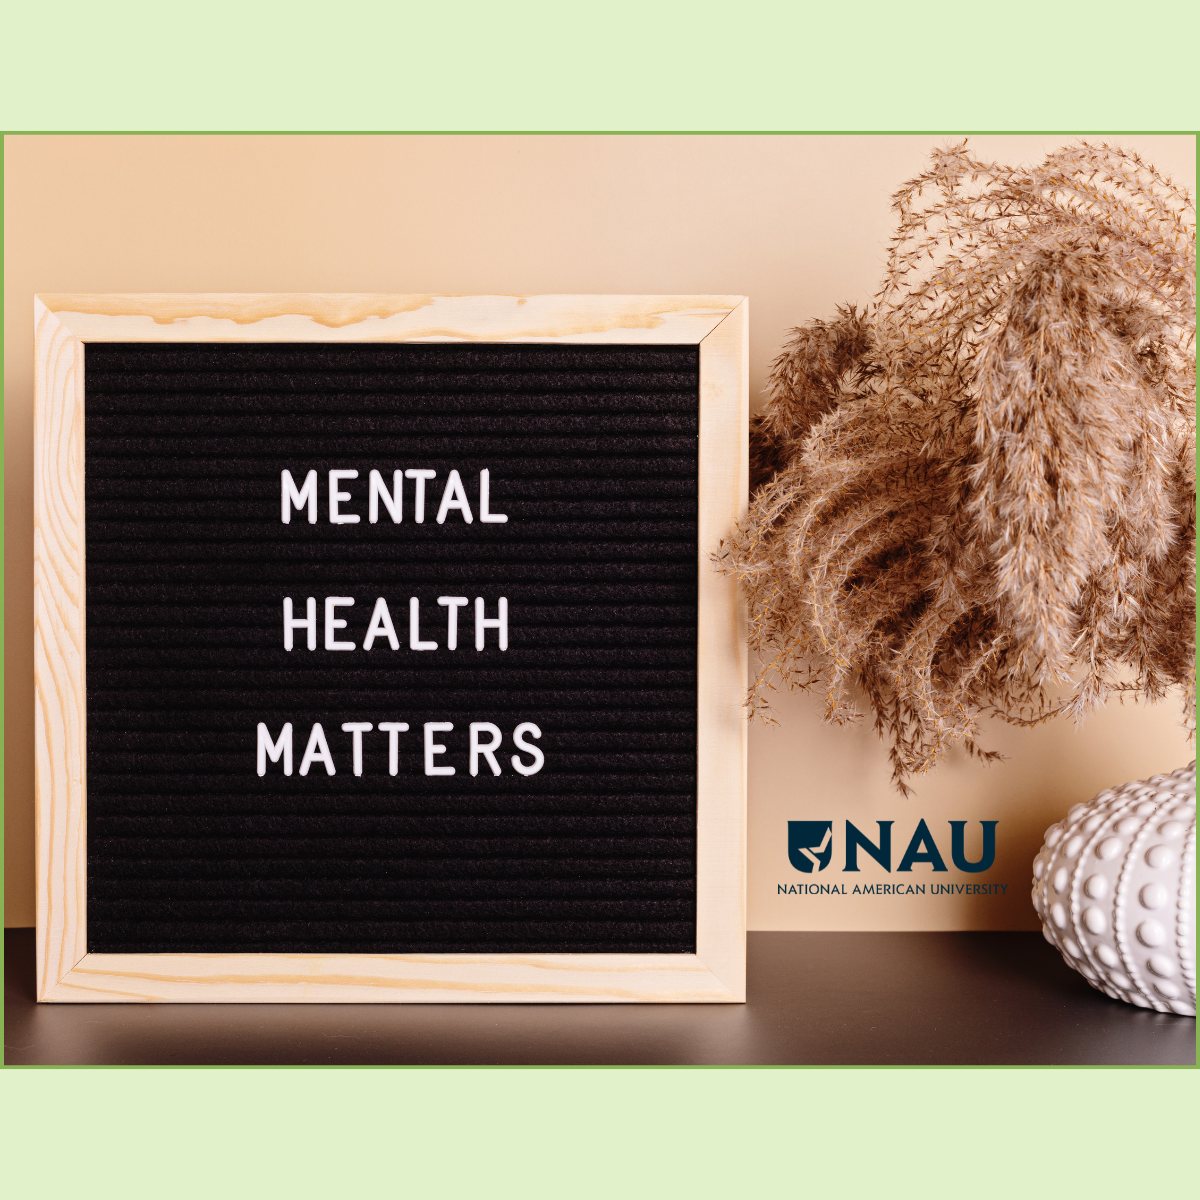 National American University’s Mental Health Initiative: Personal Wellness Days